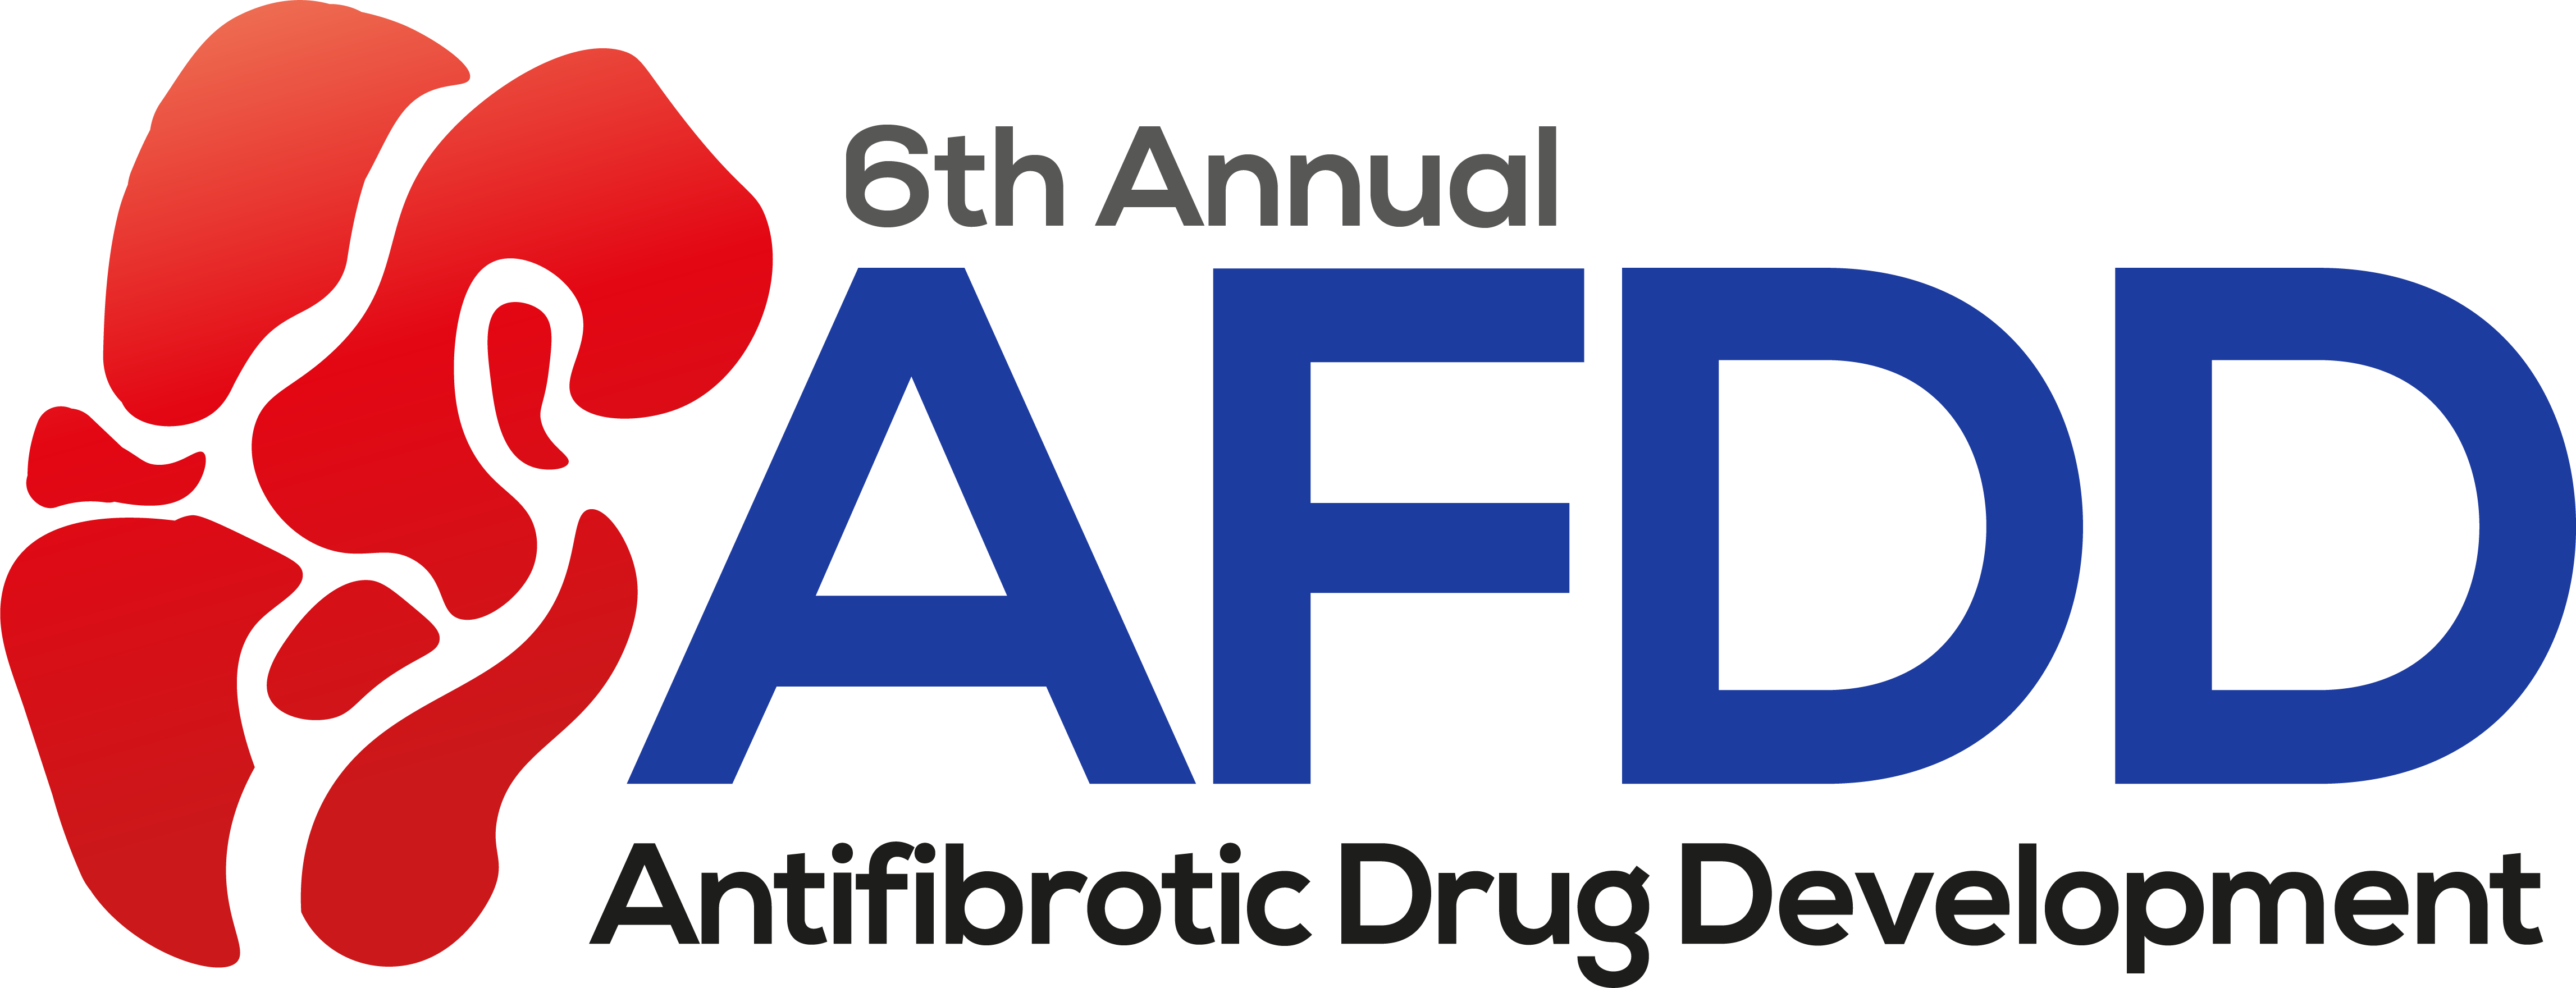 HW220510 6th Antifibrotic Drug Development Summit logo